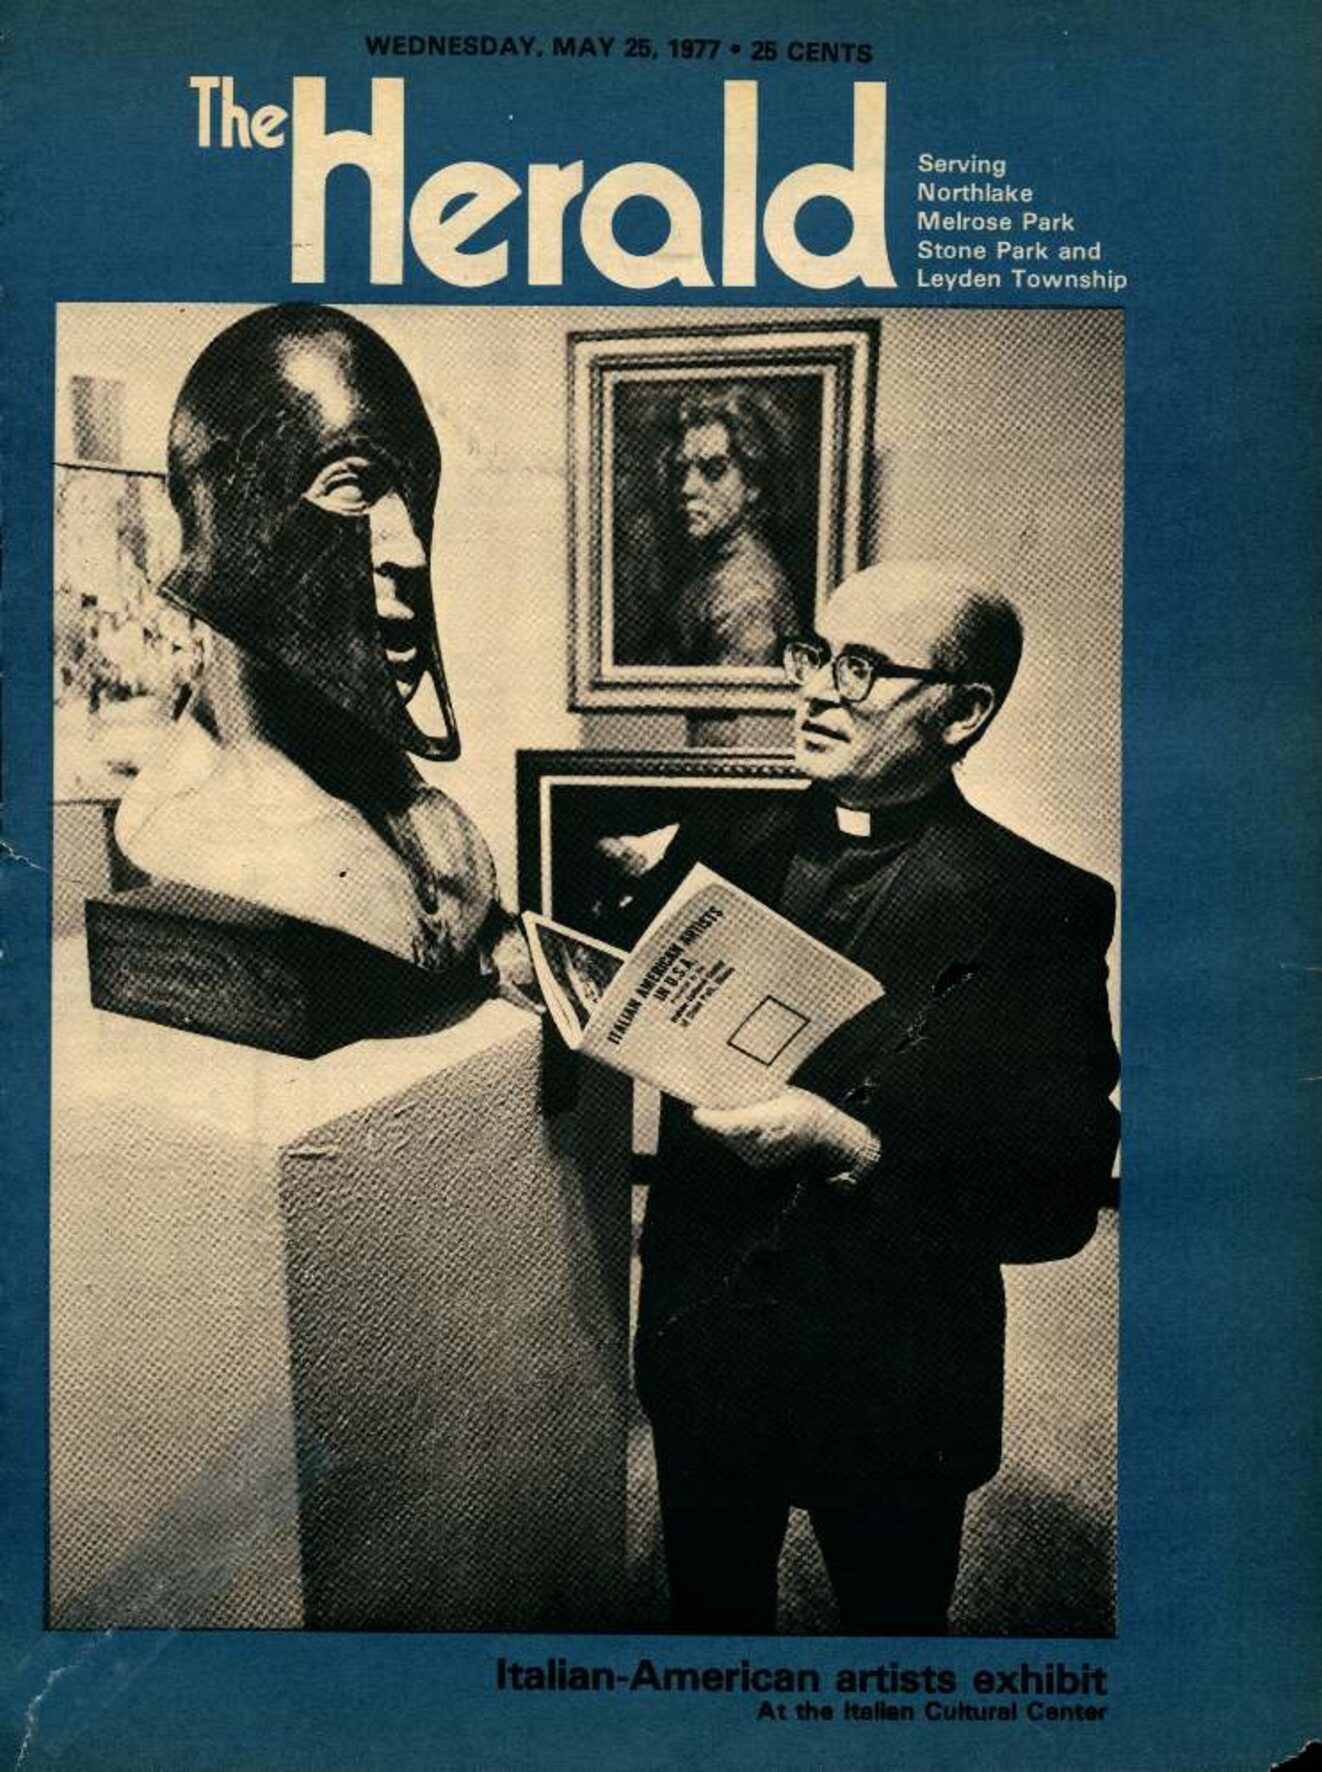 The Herald – 19770525